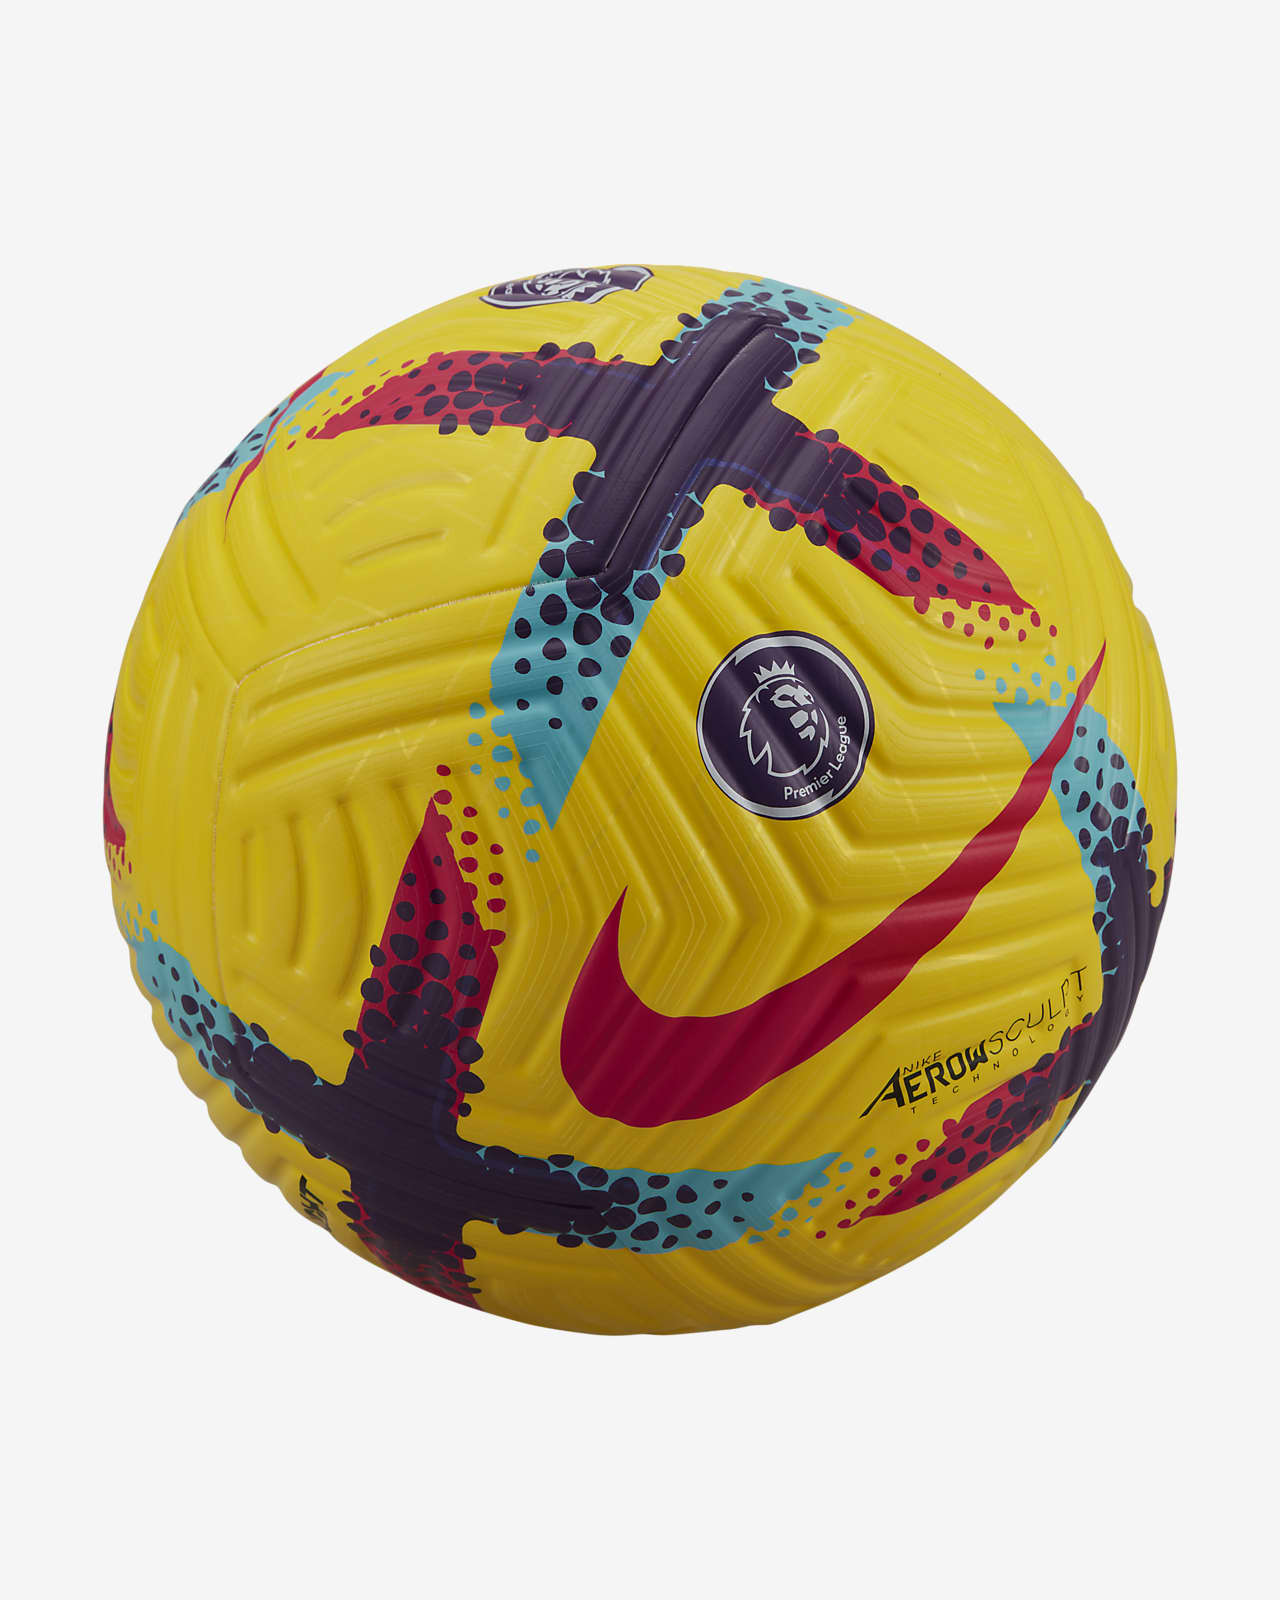 Premier League Soccer Ball. Nike.com